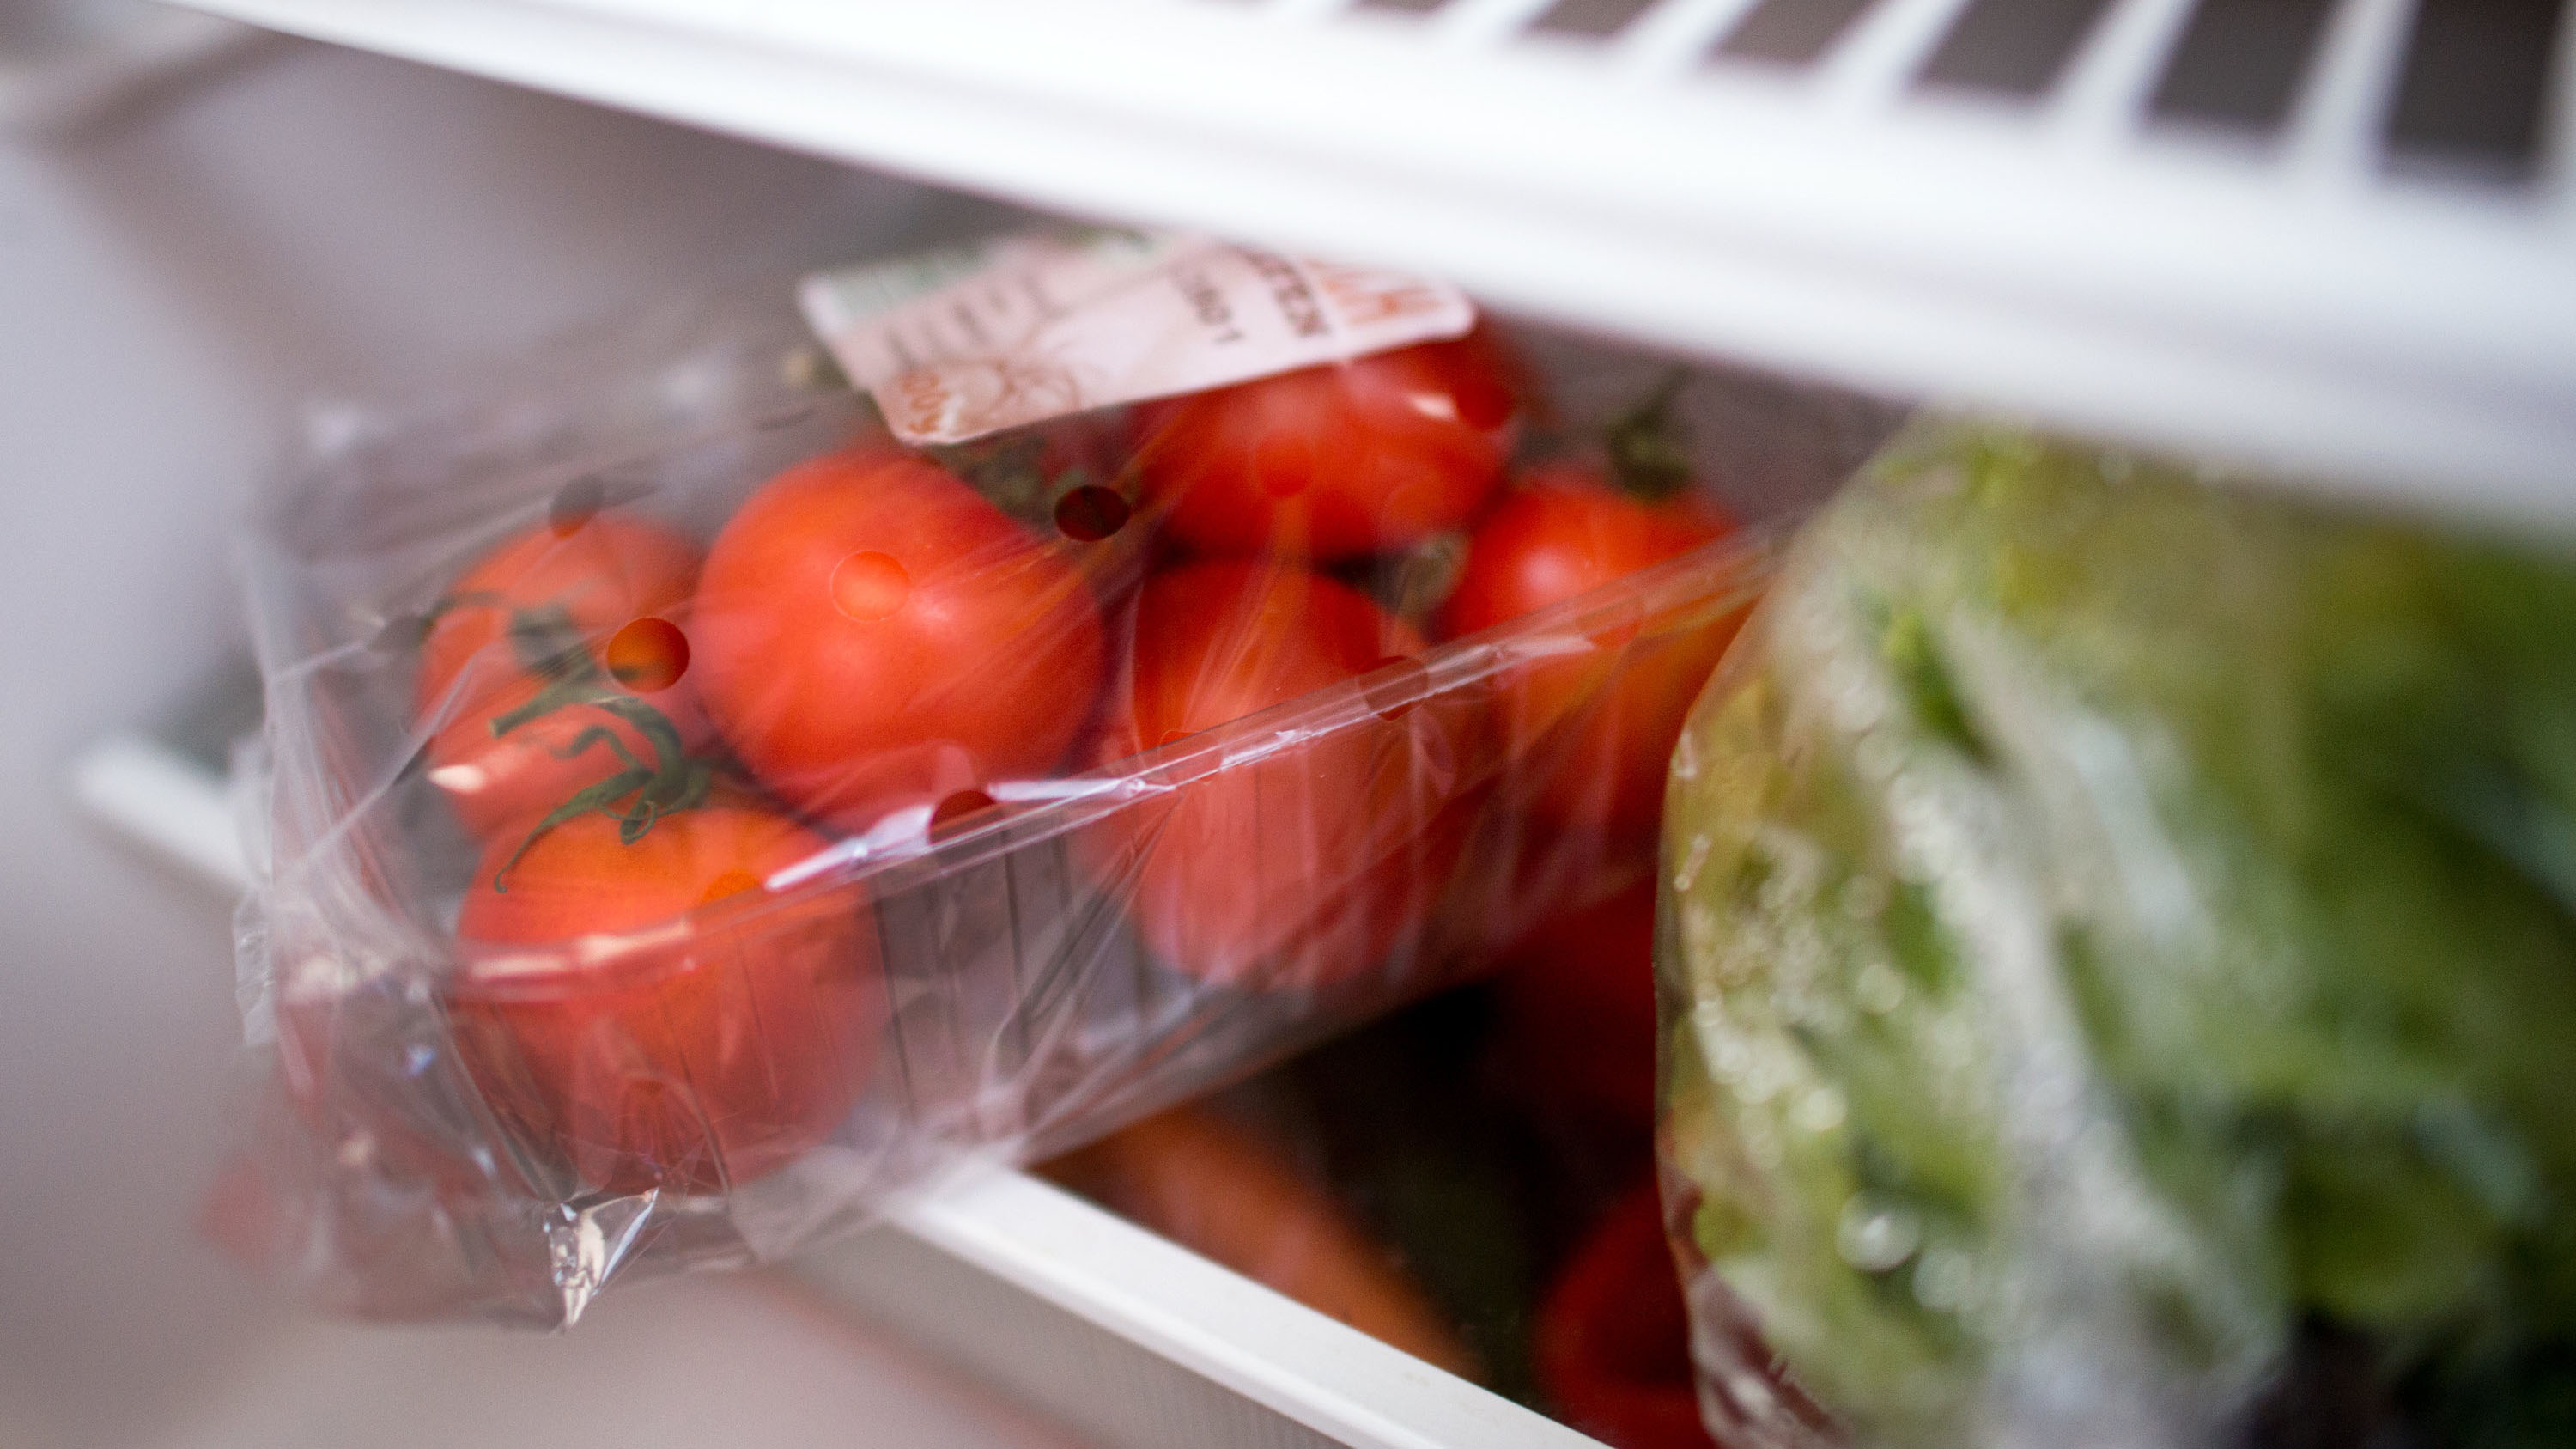 Deutsche Umwelthilfe kritisiert Verpackungsmüll bei Lebensmitteln